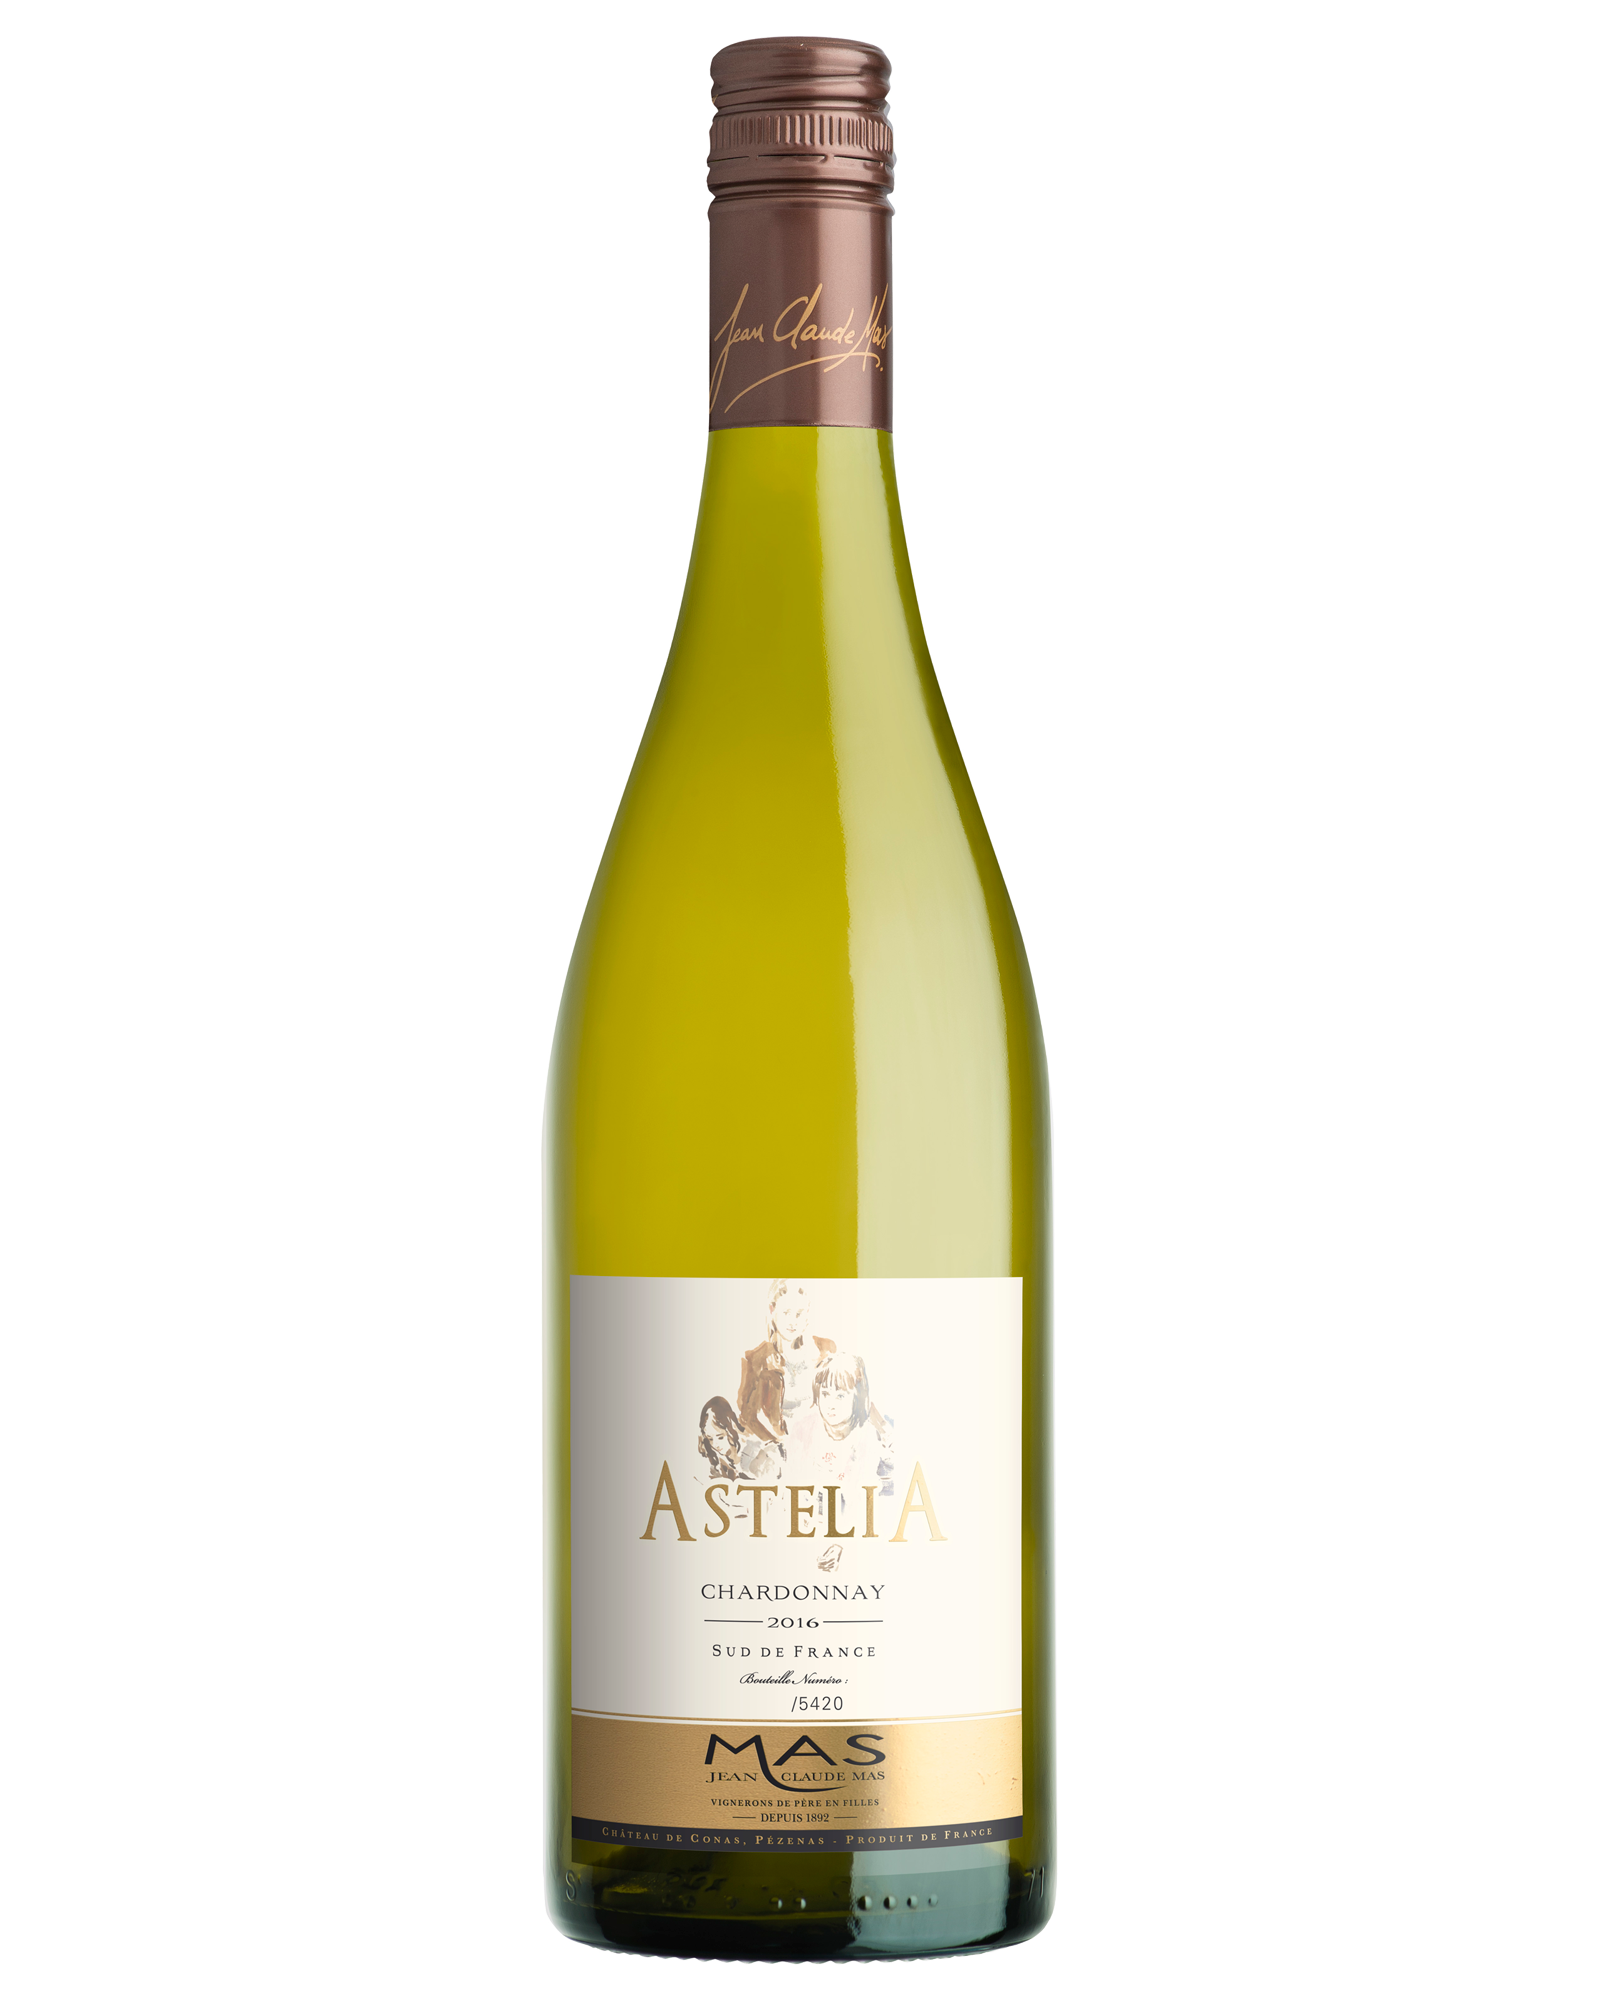 Astelia Chardonnay 2016